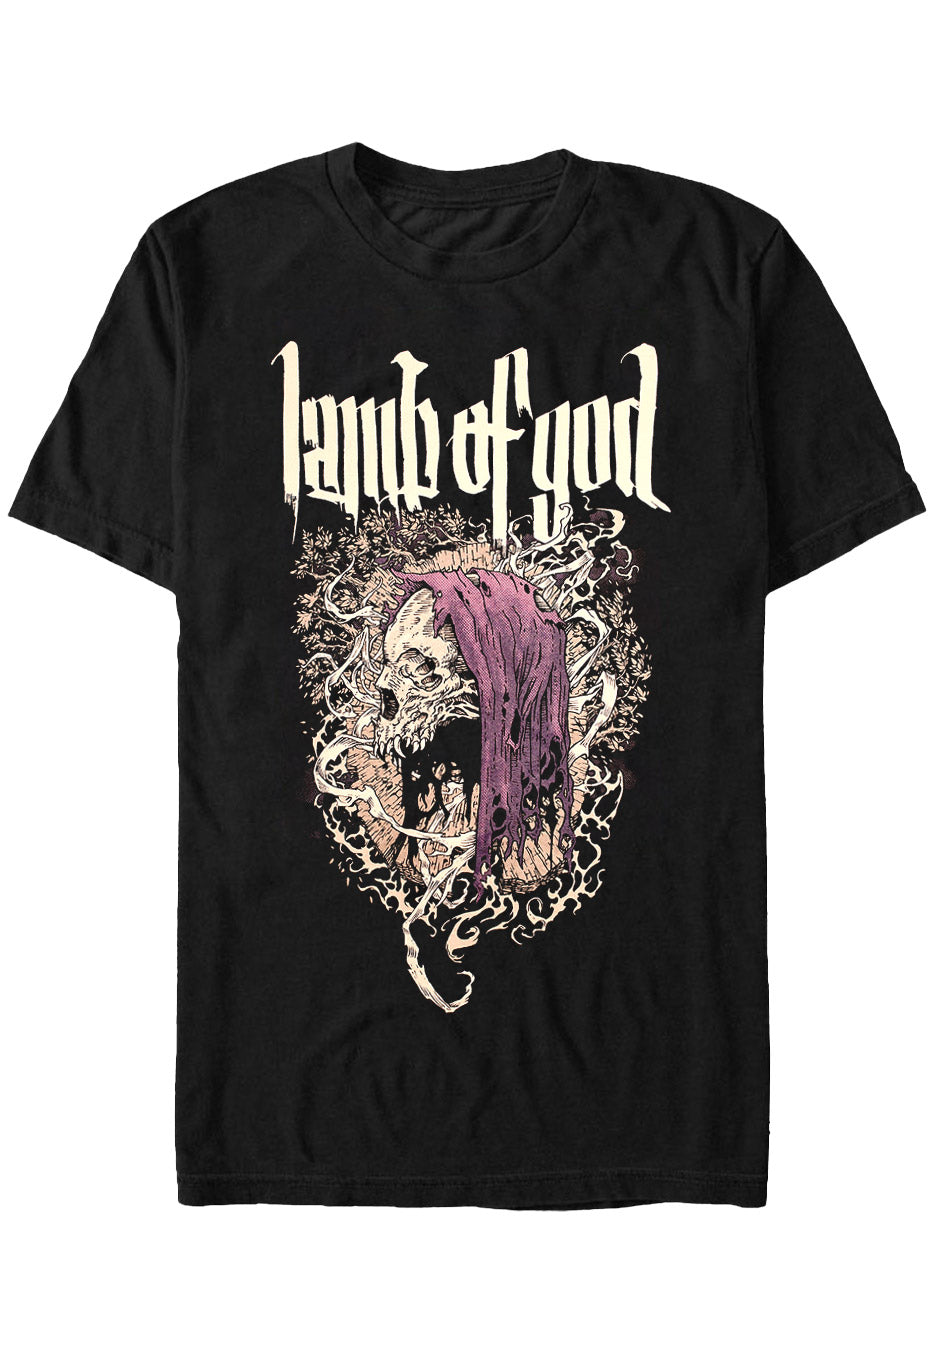 Lamb Of God - Hooded Scribe - T-Shirt